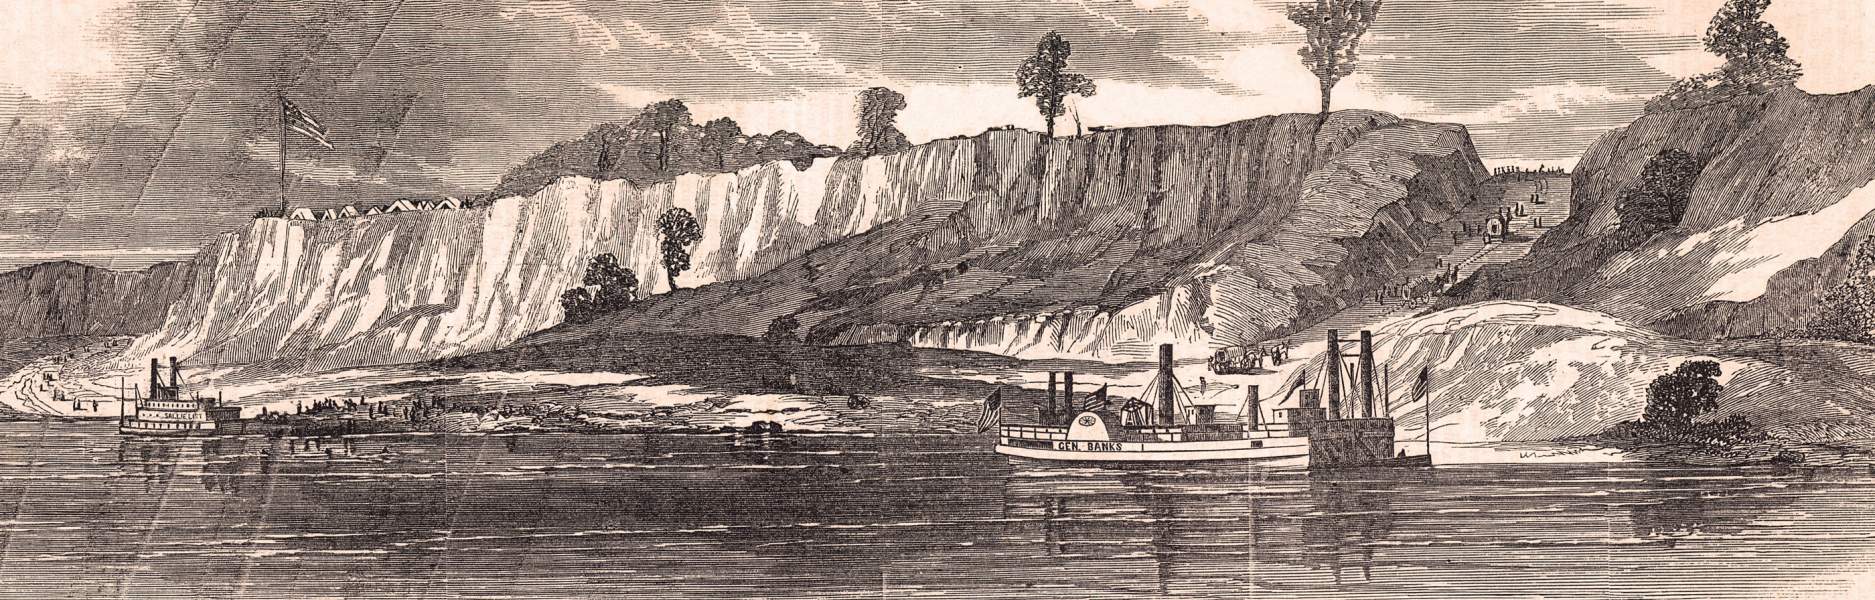 Confederate batteries defending Port Hudson, July 1863, artist's impression, zoomable image